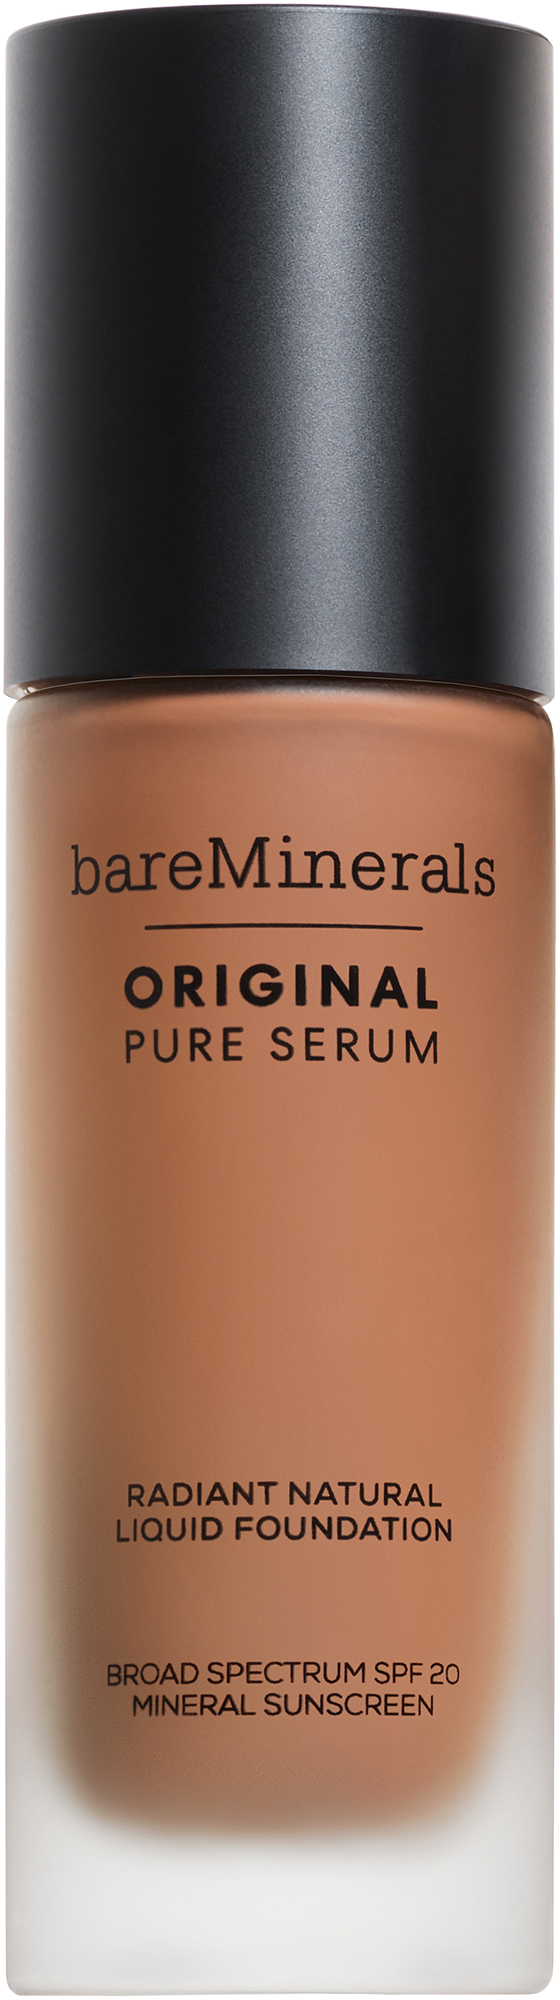 Fair Cool 1 Original Pure Serum Radiant Natural Liquid Foundation Mineral  SPF 20 - bareMinerals